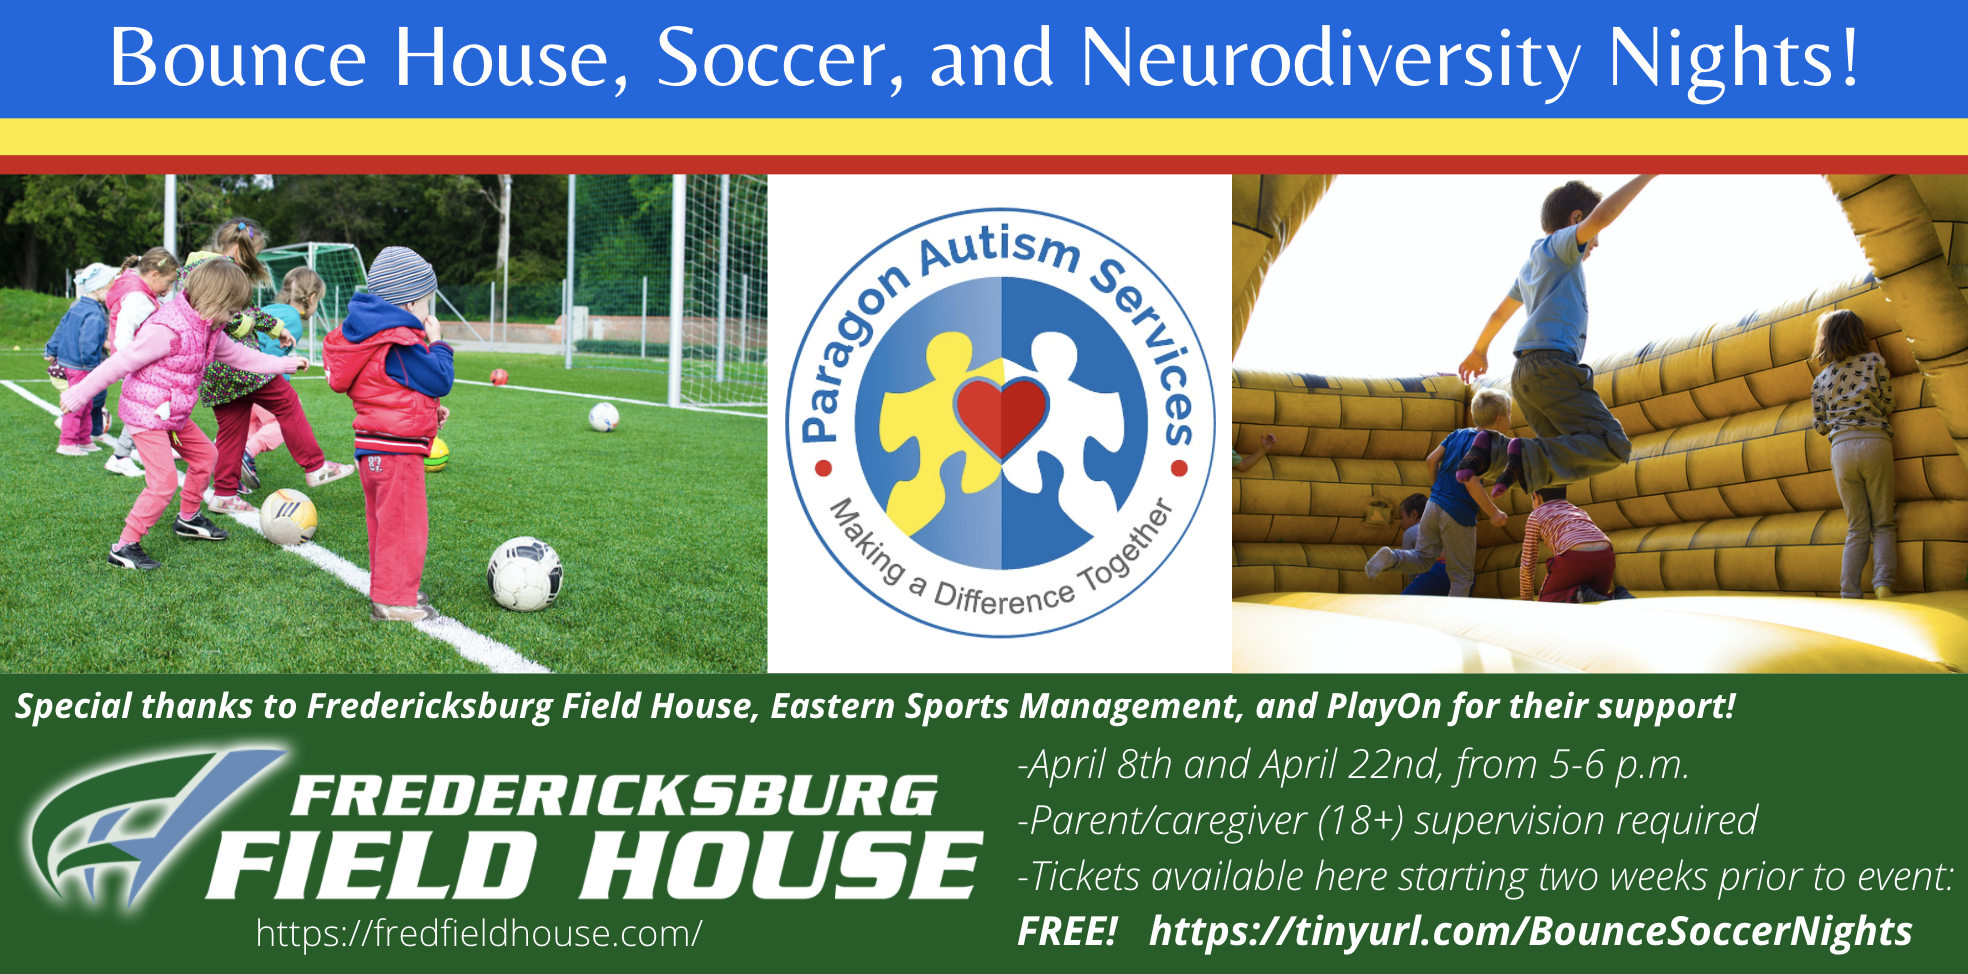 Bounce House, Soccer, and Neurodiversity Nights! @ Fredericksburg Field House